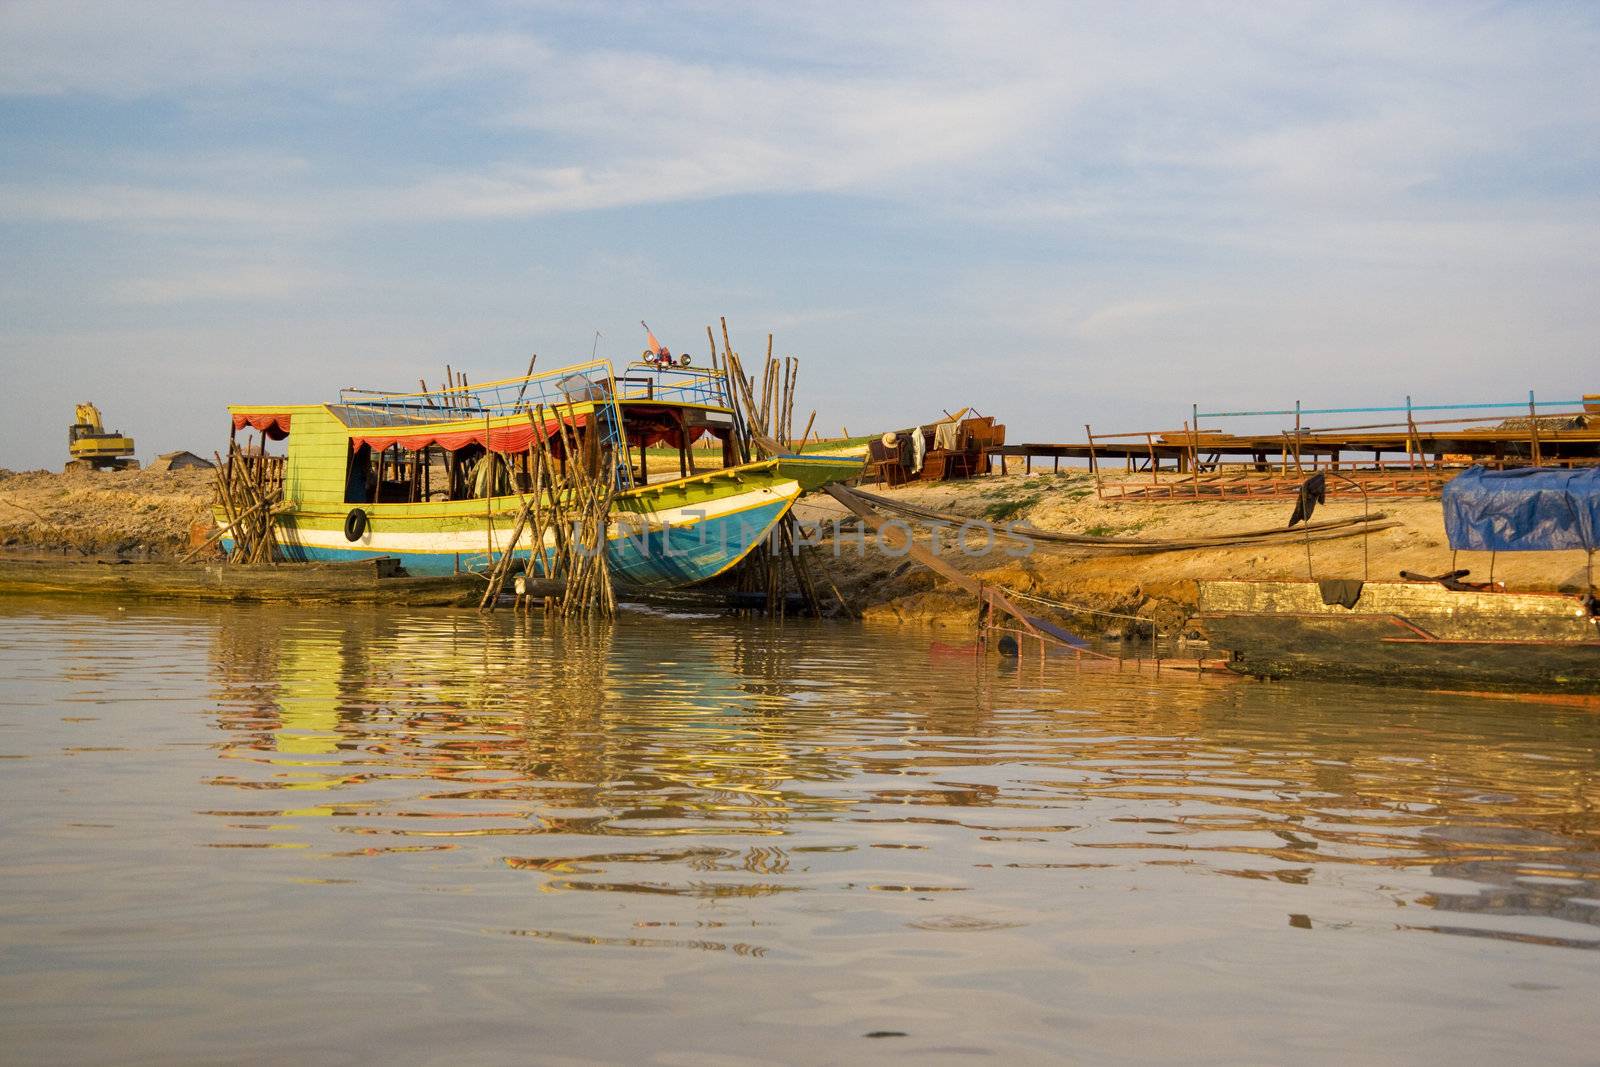 Chong Kneas River Boat, Cambodia by shariffc